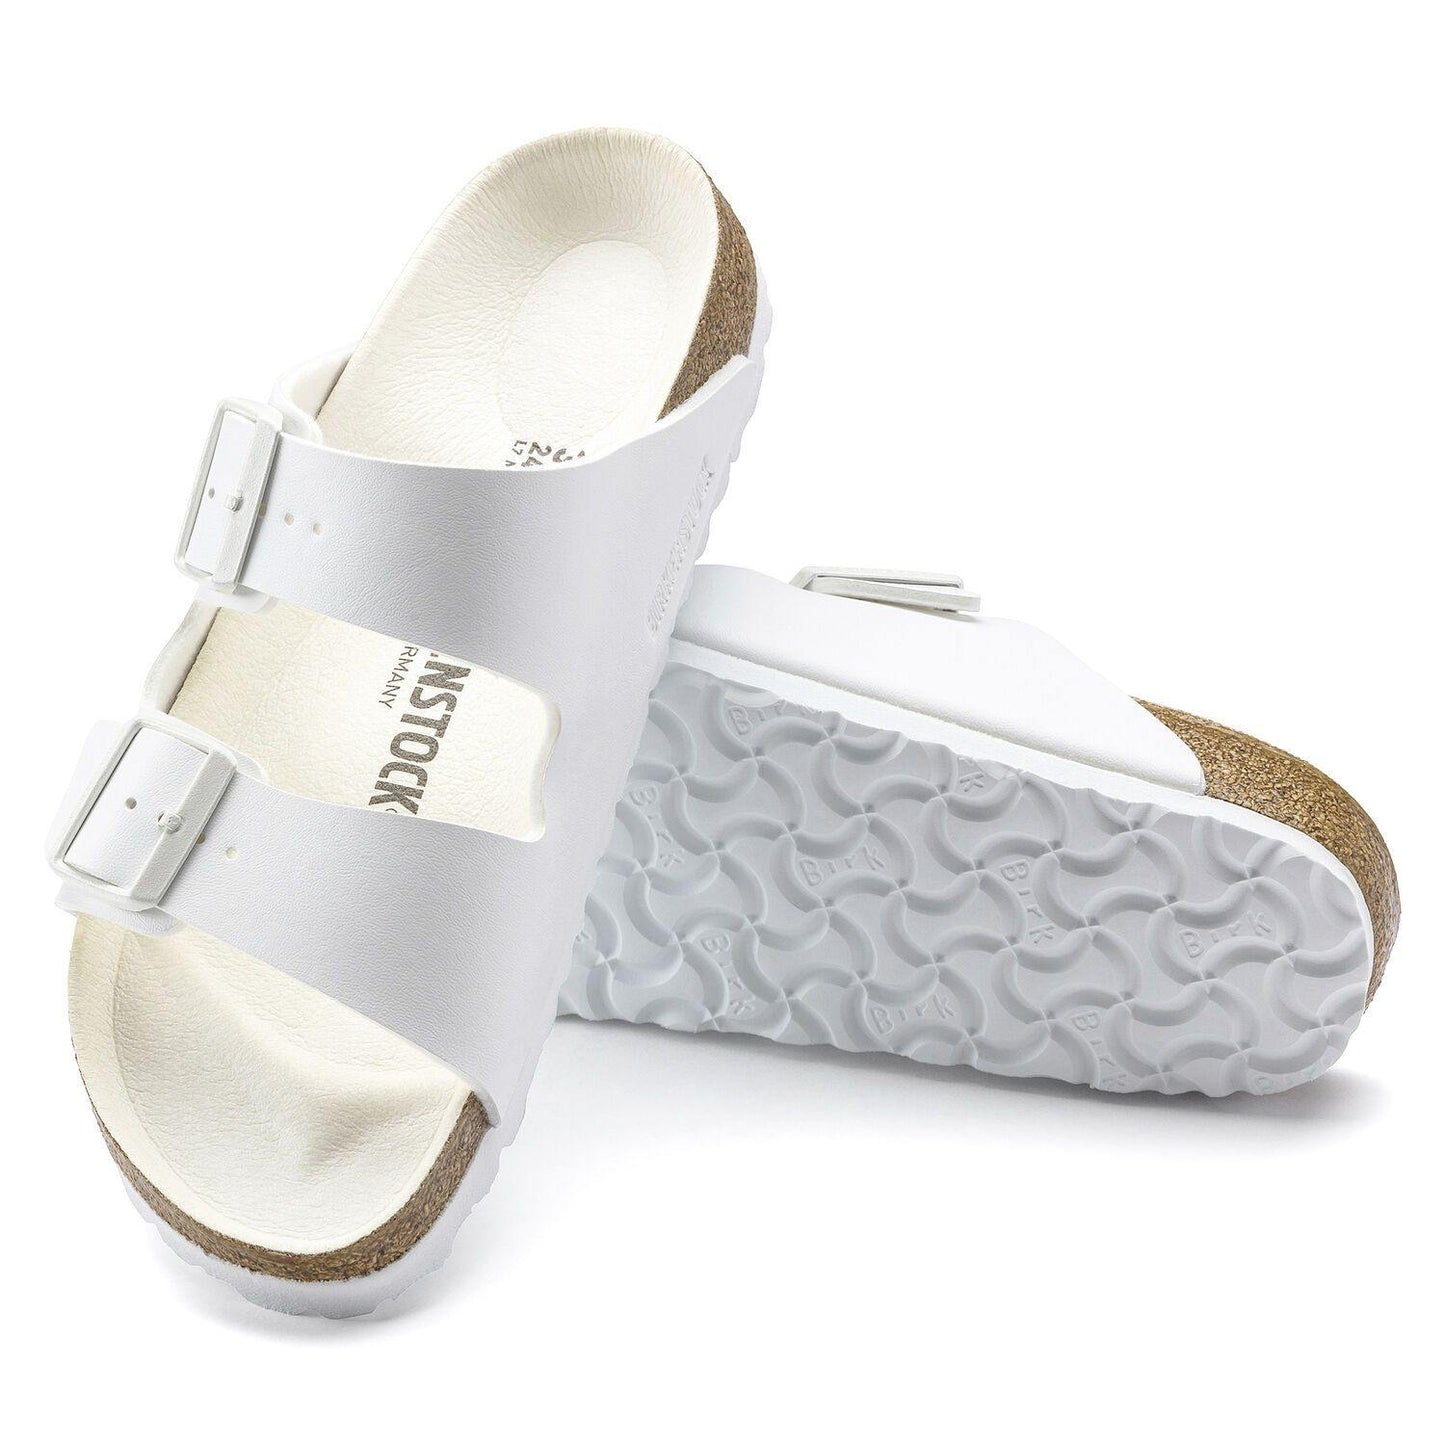 Arizona BS - Total white - Bel Ami calzature